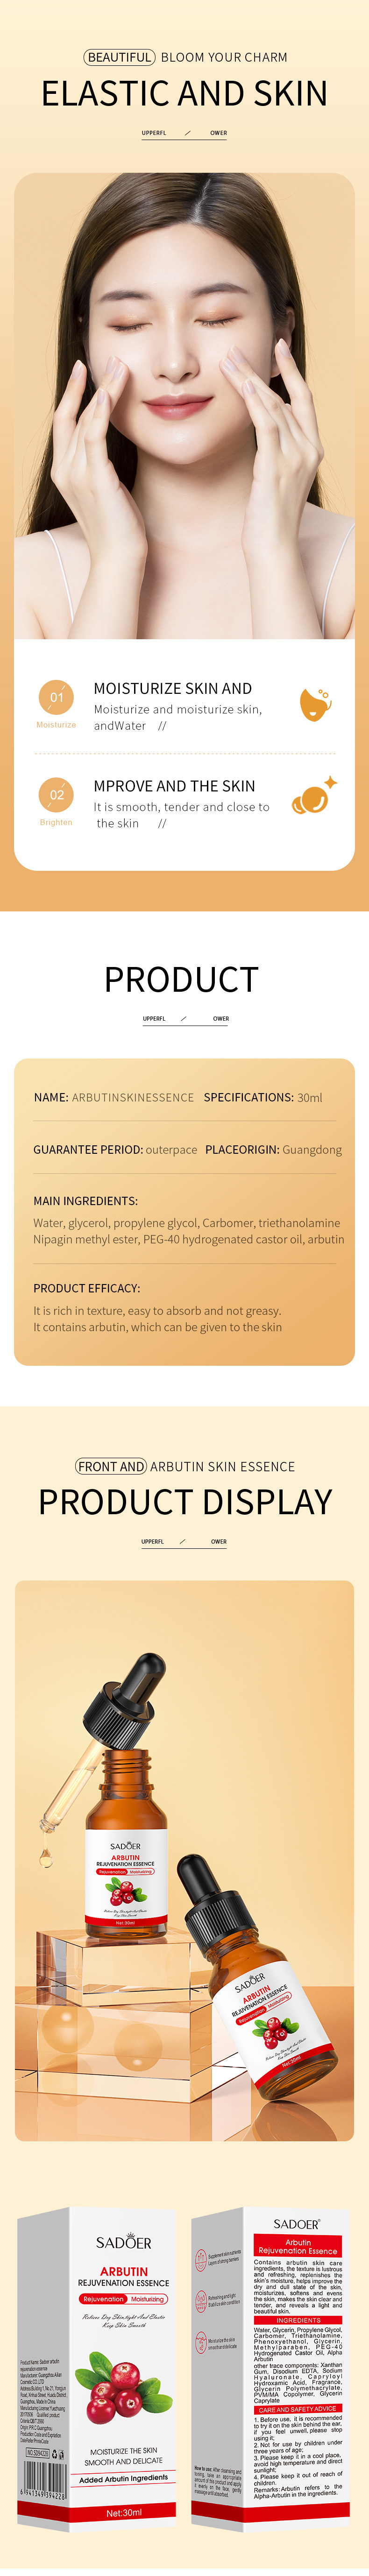 Arbutin Serum - Sadoer Arbutin Serum - Rejuvenating, Moisturizing, and Hydrating Skincare Solution - 30ml - SHOPEE MALL | Sri Lanka